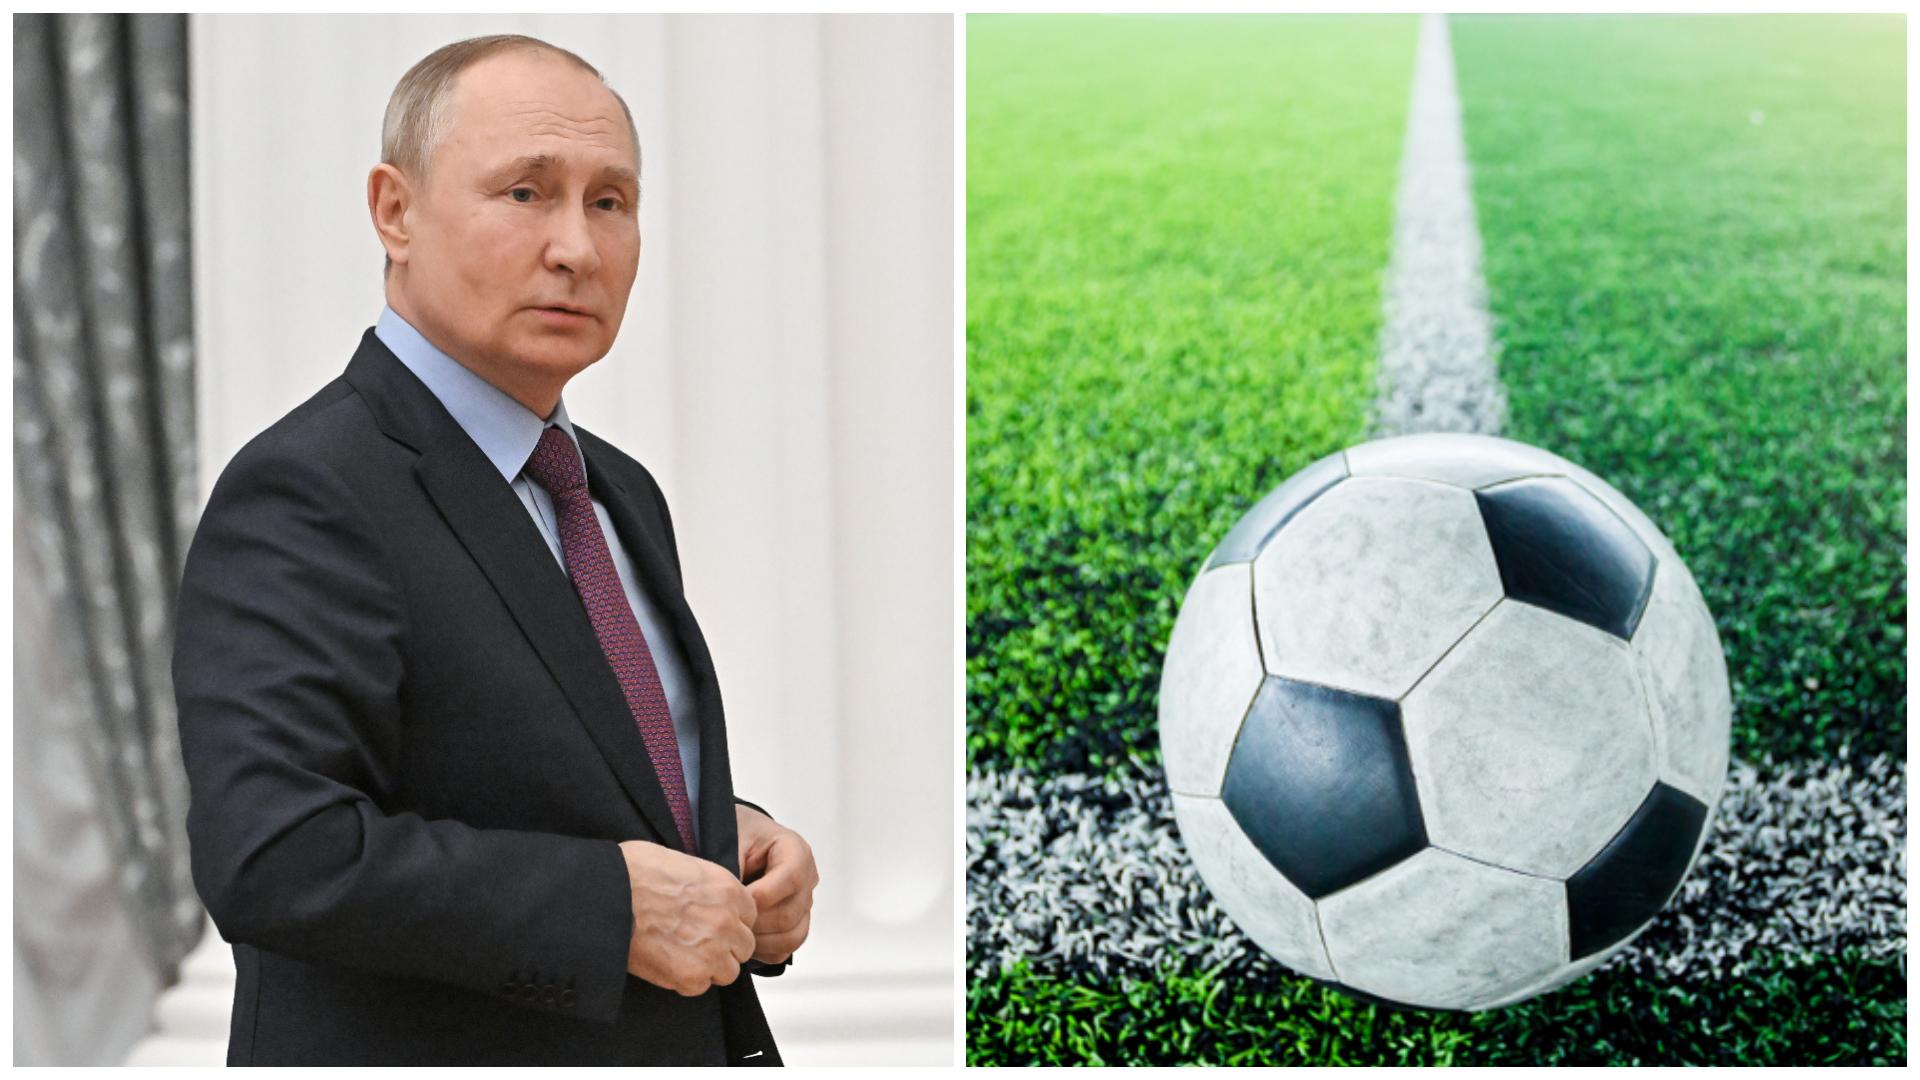 Colaj cu Vladimir Putin și o minge de fotbal